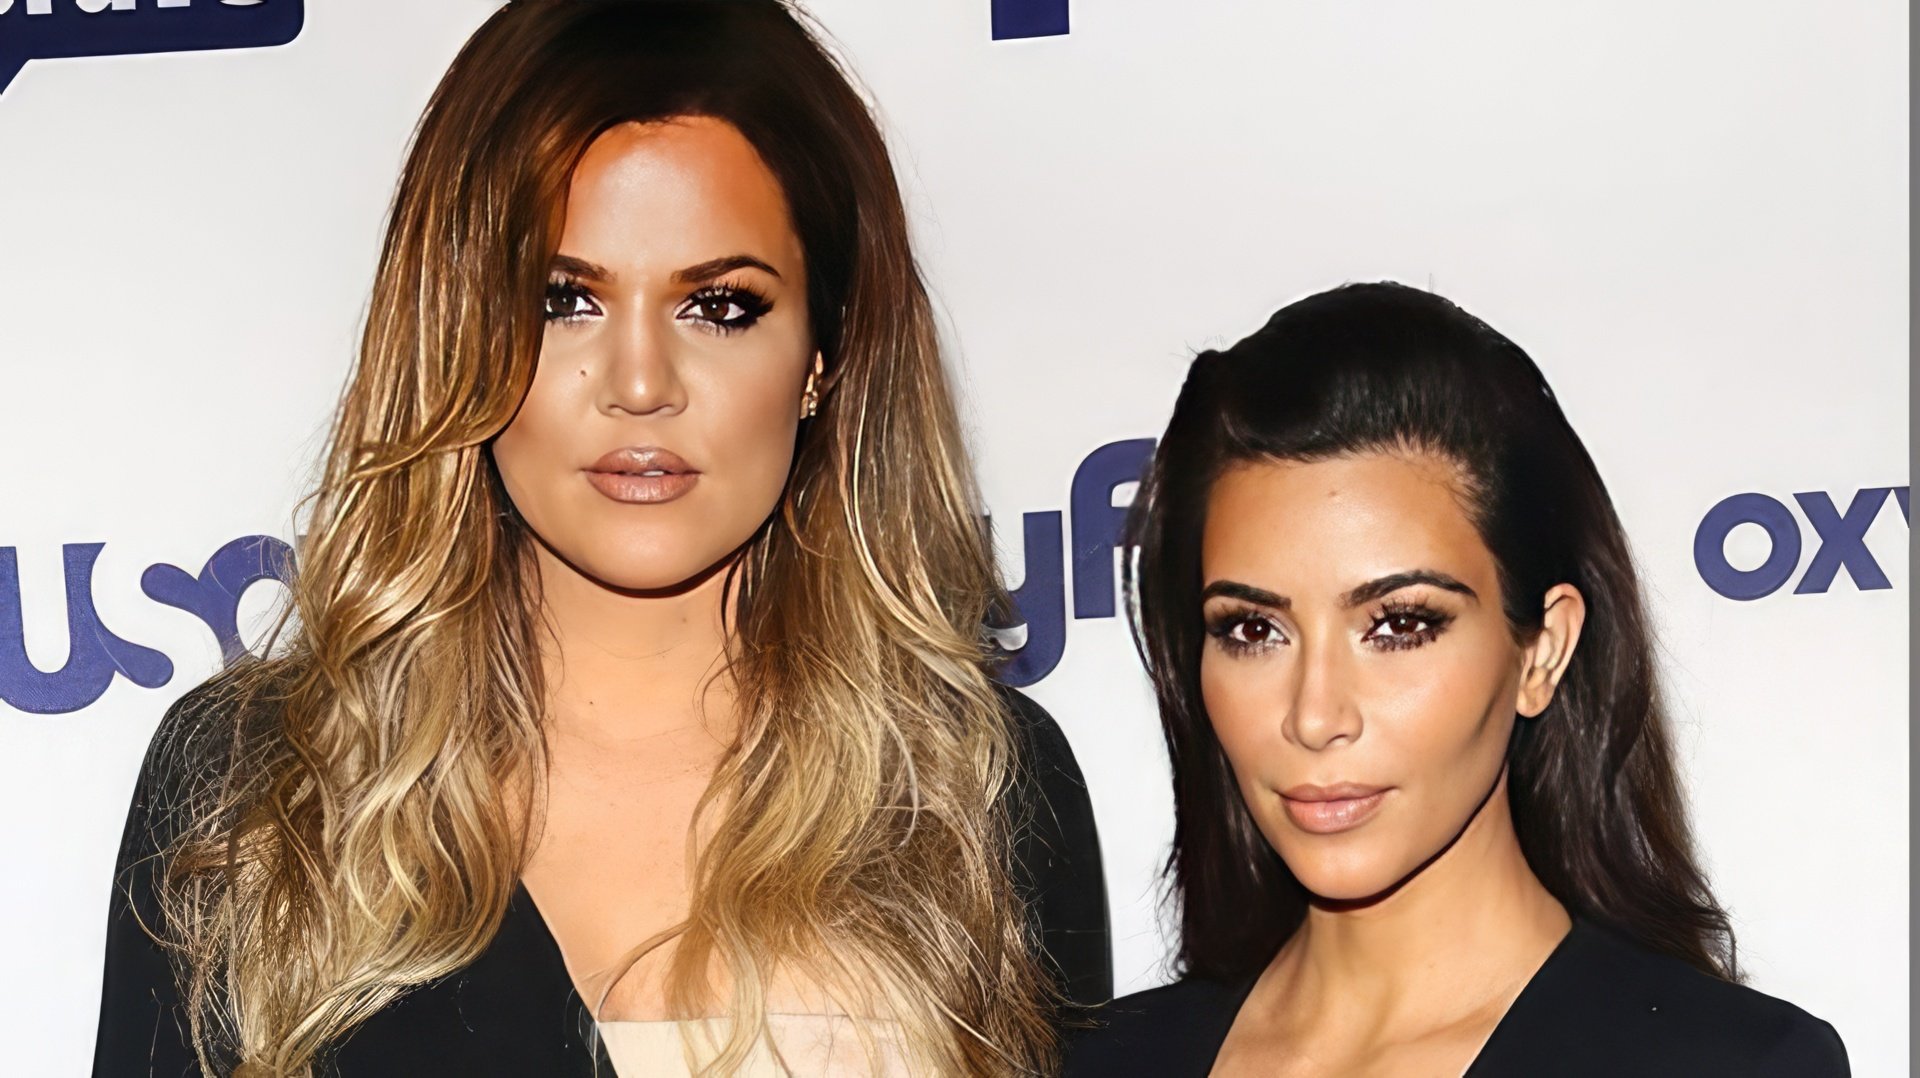 Khloé Kardashian with her sister Kim Kardashian